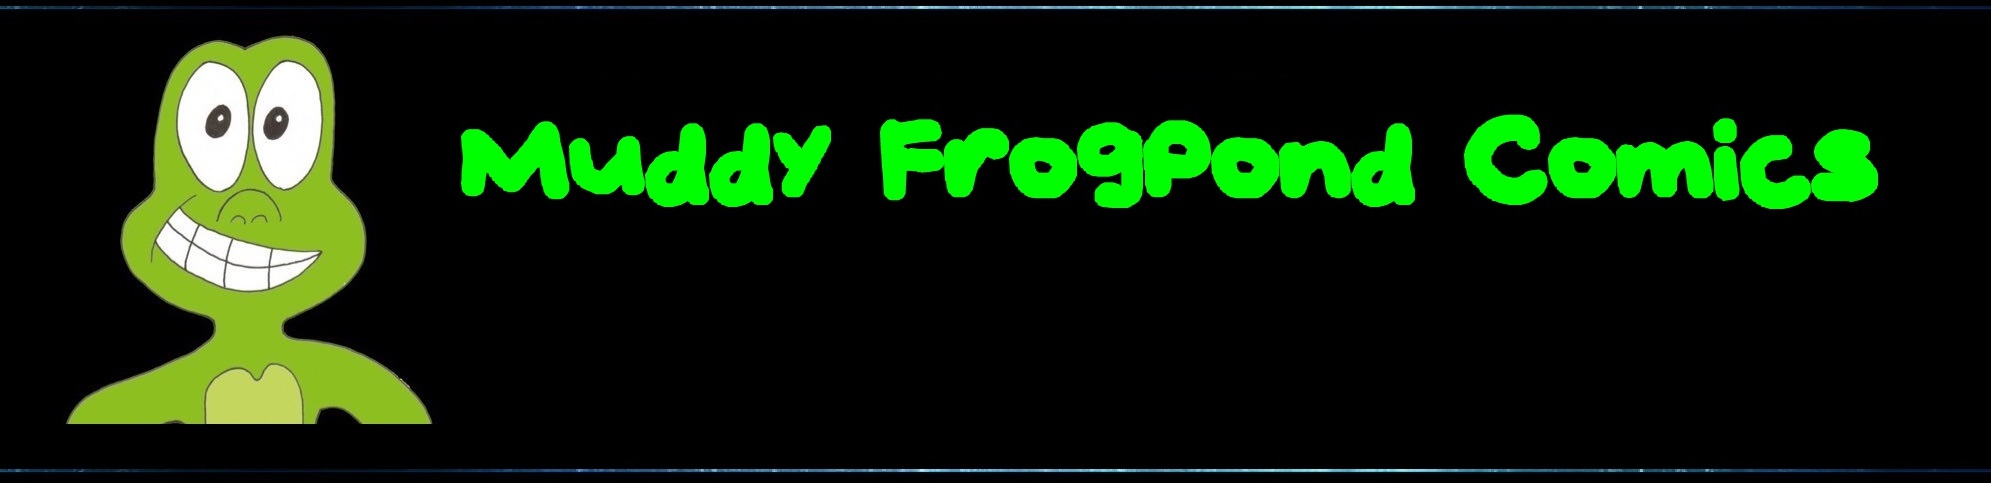 Welcome to Muddy Frogpond Comics